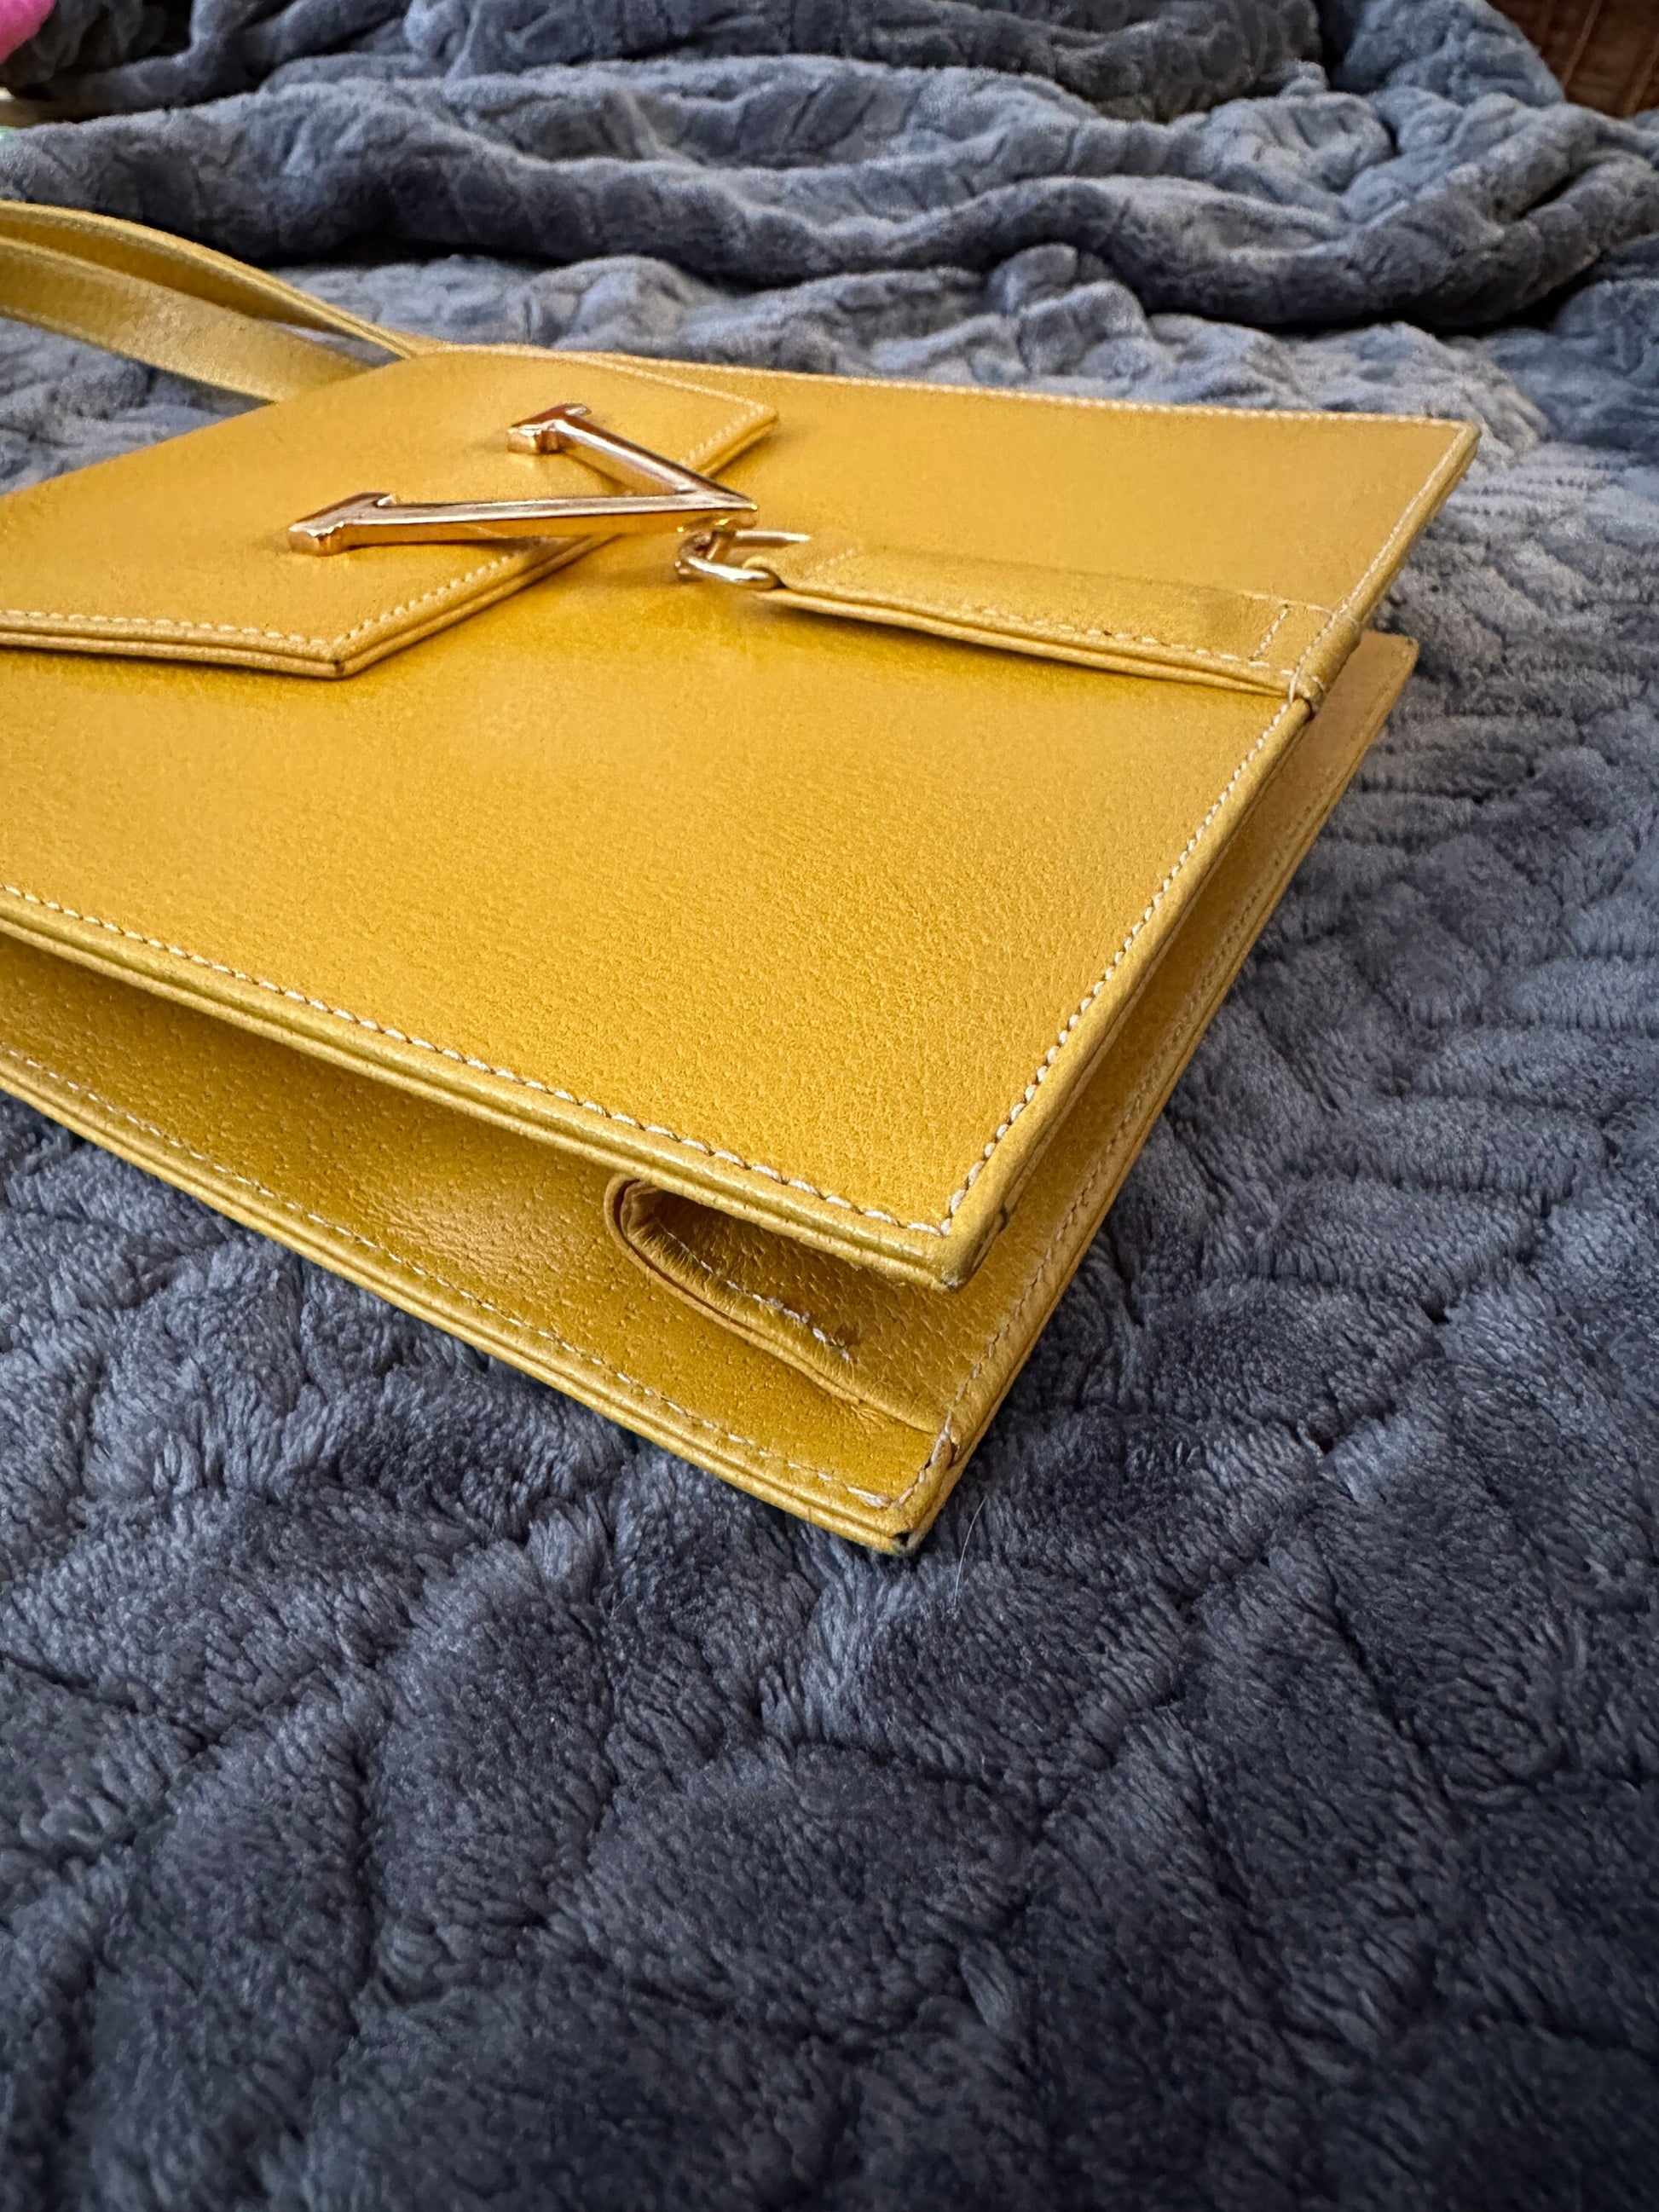 VALENTINO VINTAGE 100% Authentic Genuine Leather Handbag, Yellow, 1990's, Great Condition